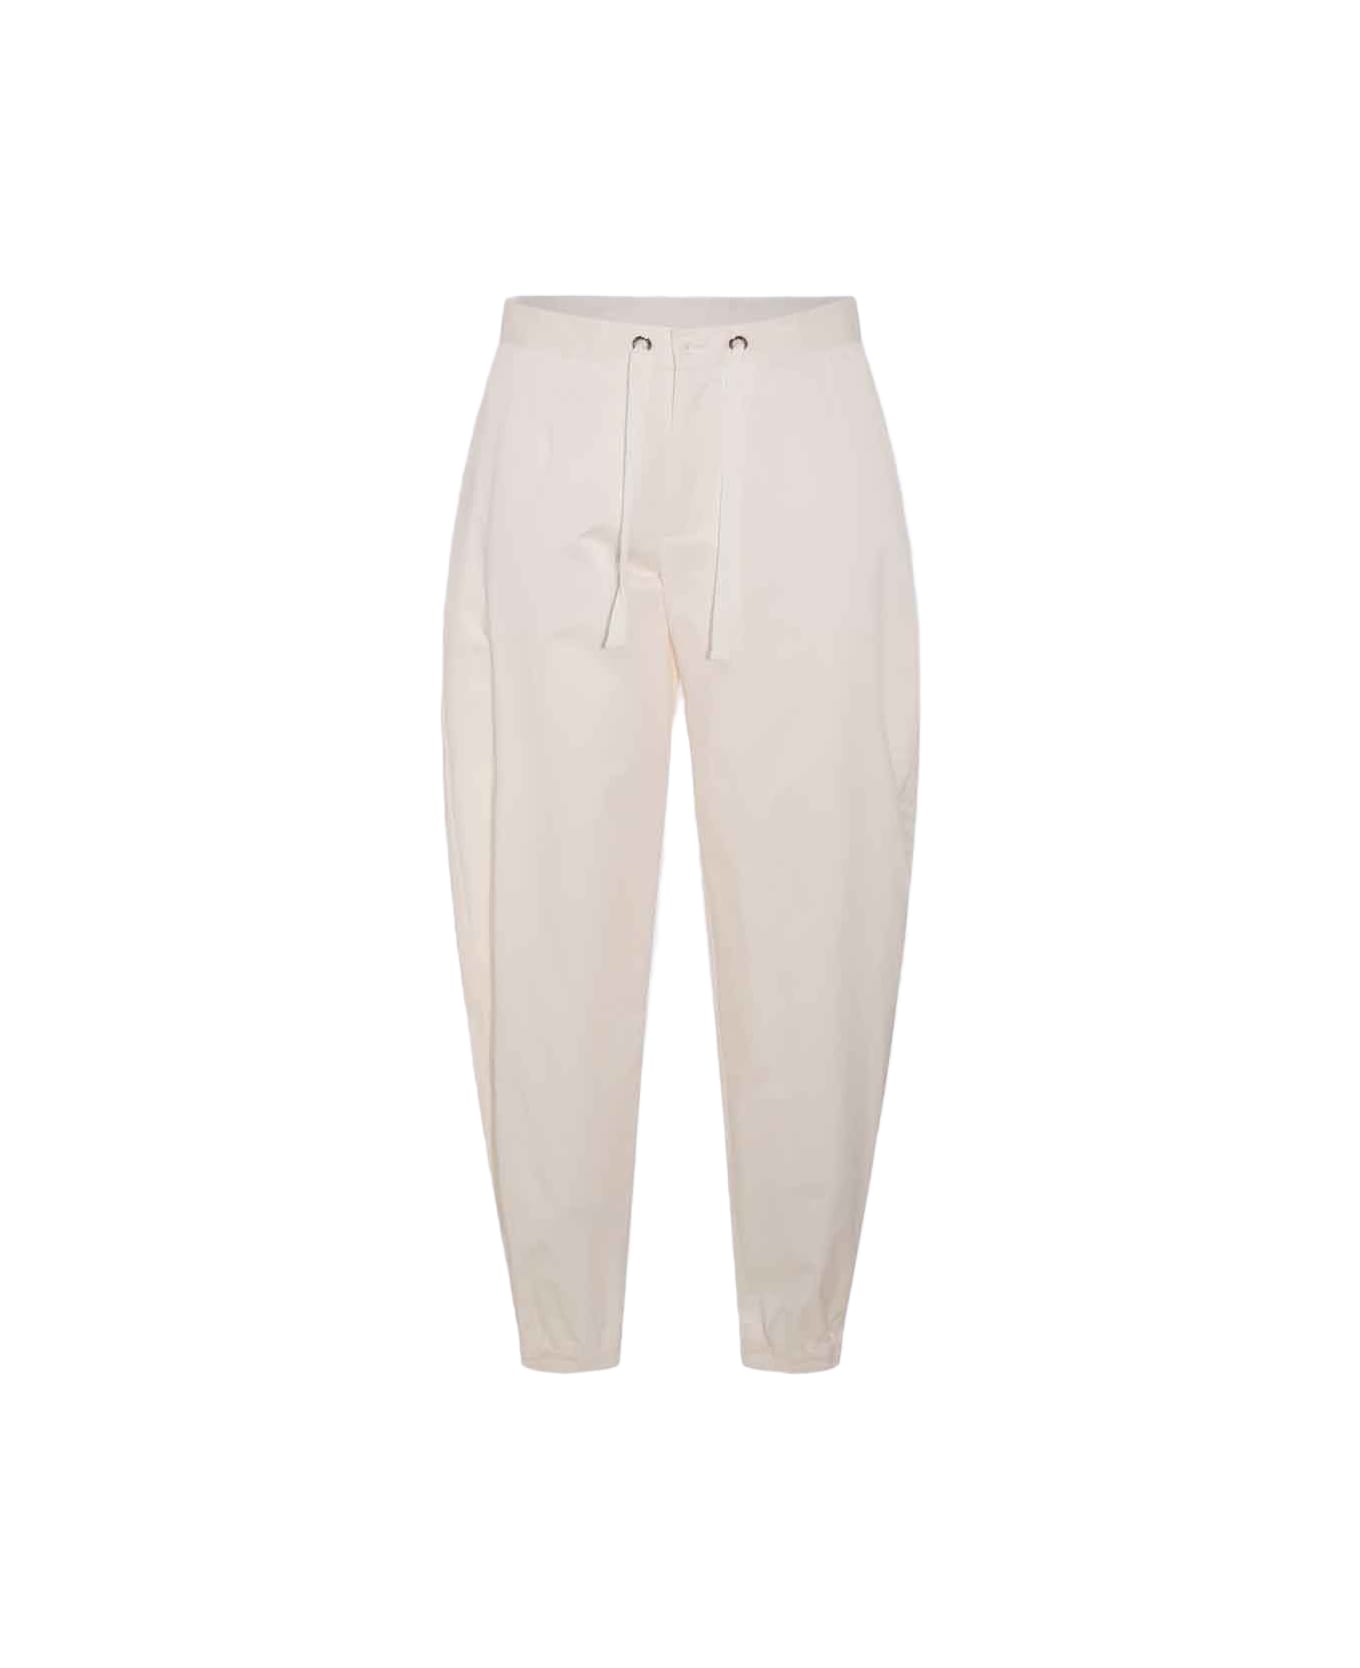 Dolce & Gabbana Cream Cotton Pants - White